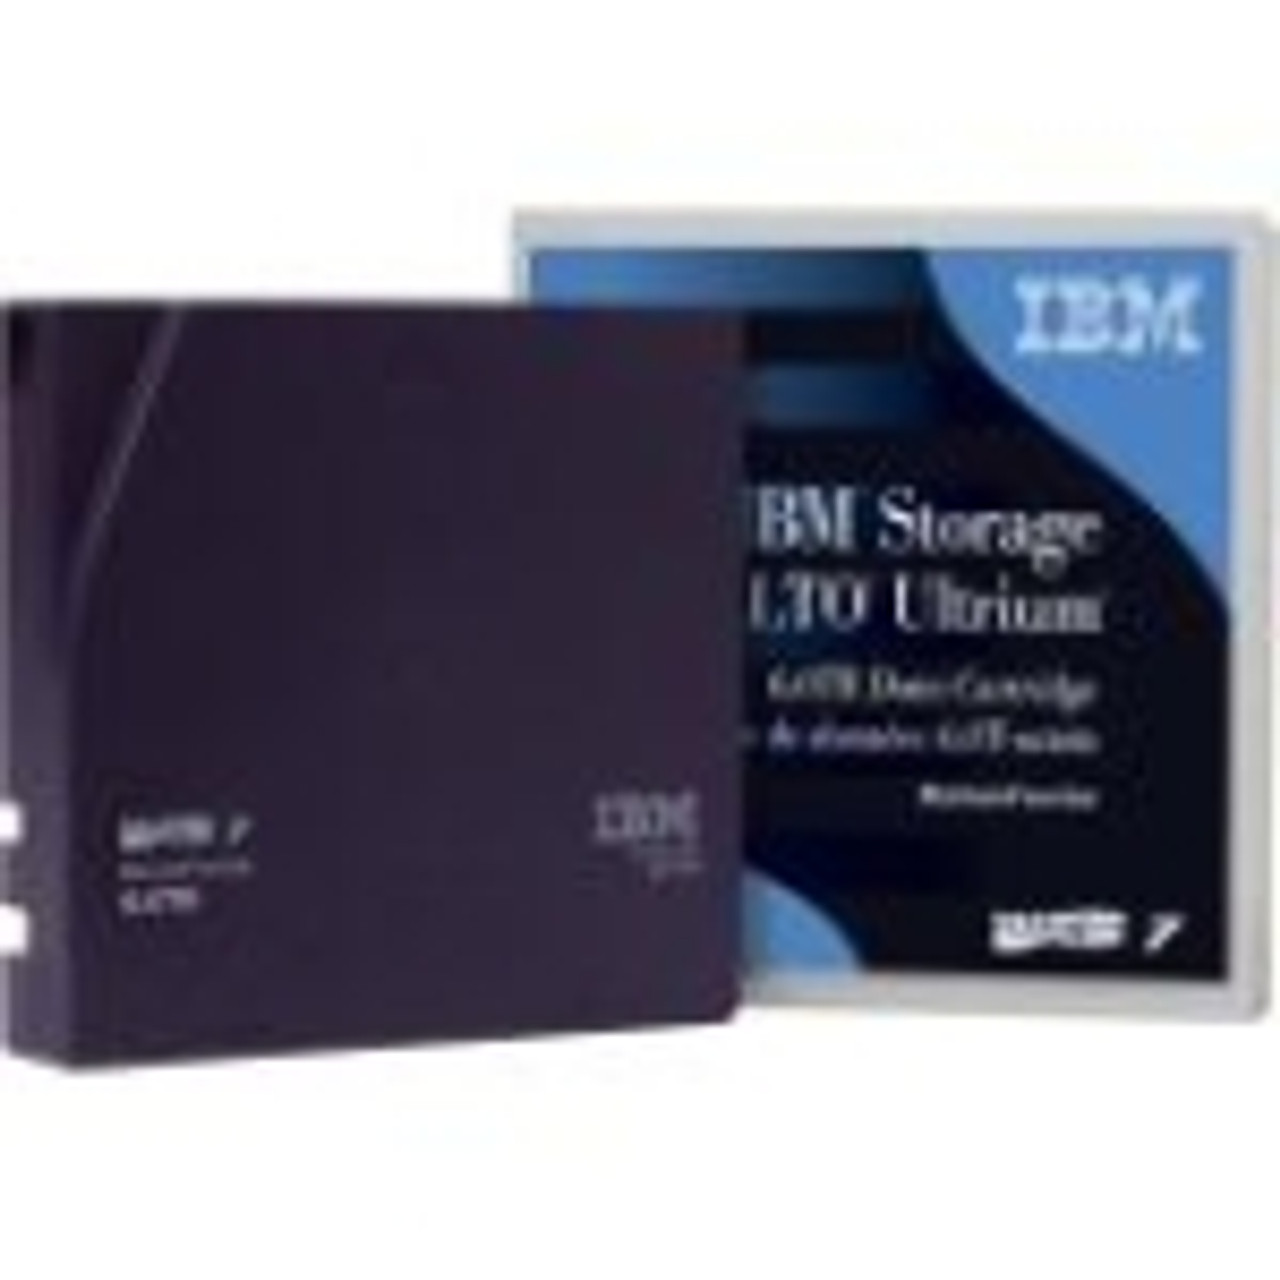 38L7302L IBM LTO Ultrium 7 Data Cartridge LTO-7 Labeled 6TB (Native) / 15TB  (Compressed) 3149.61 ft Tape Length 1 Pack